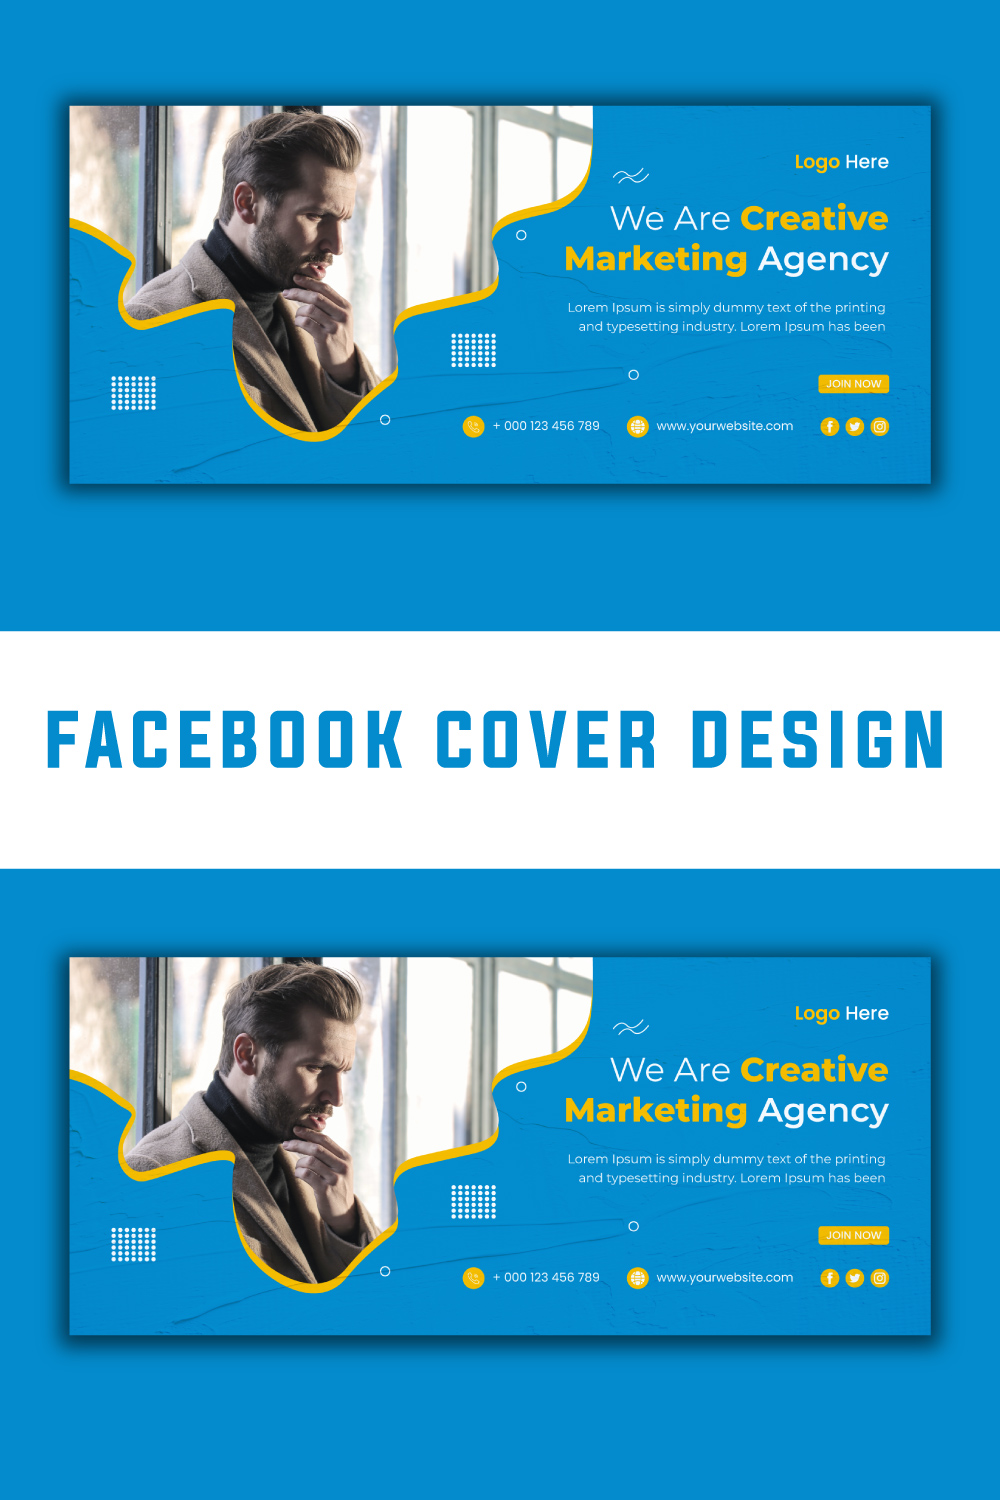 Digital marketing agency Facebook banner pinterest preview image.